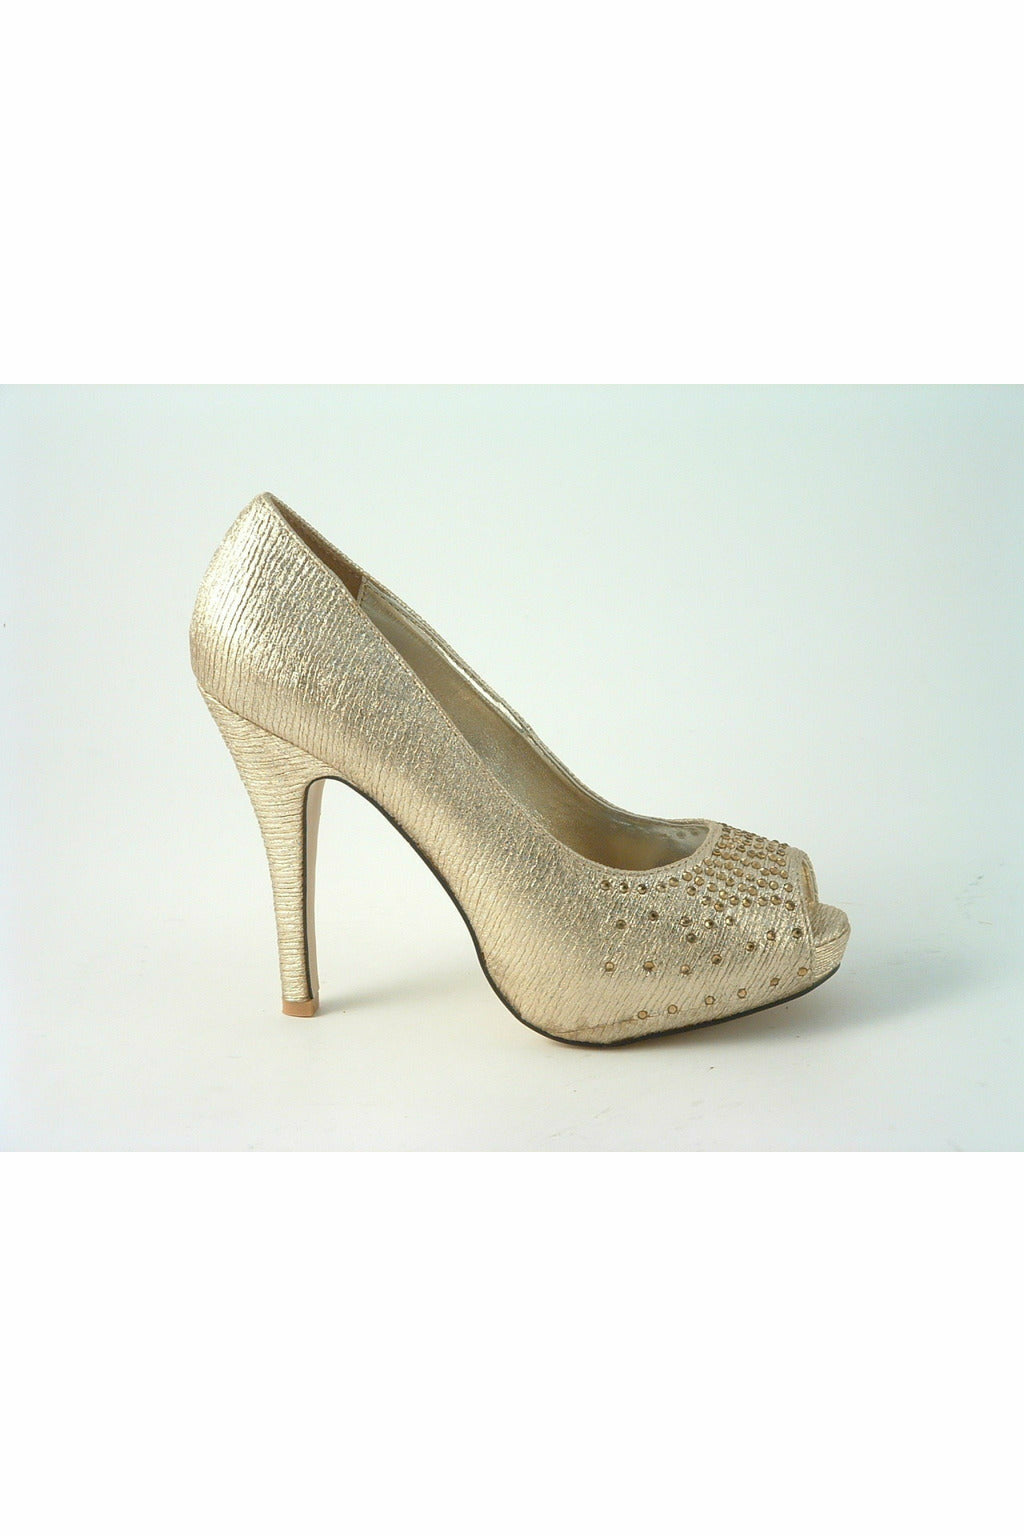 Sabatine Sparkle Peep-toe Shoes - Gold MSM272-GOLD